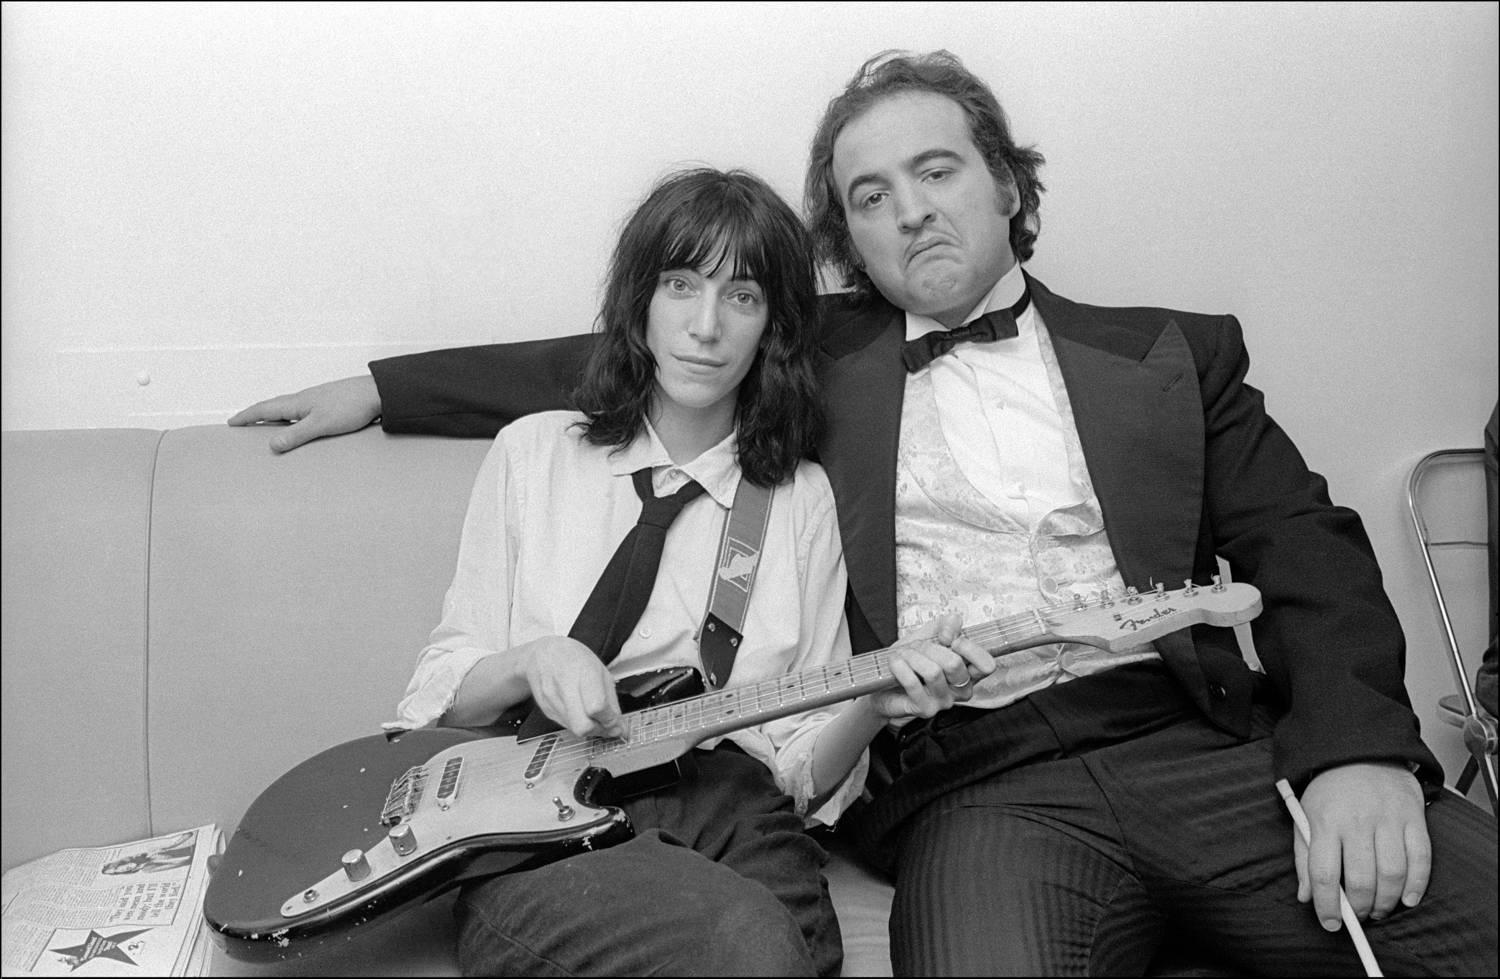 Patti Smith and John Belushi backstage at Saturday Night Live, 1976